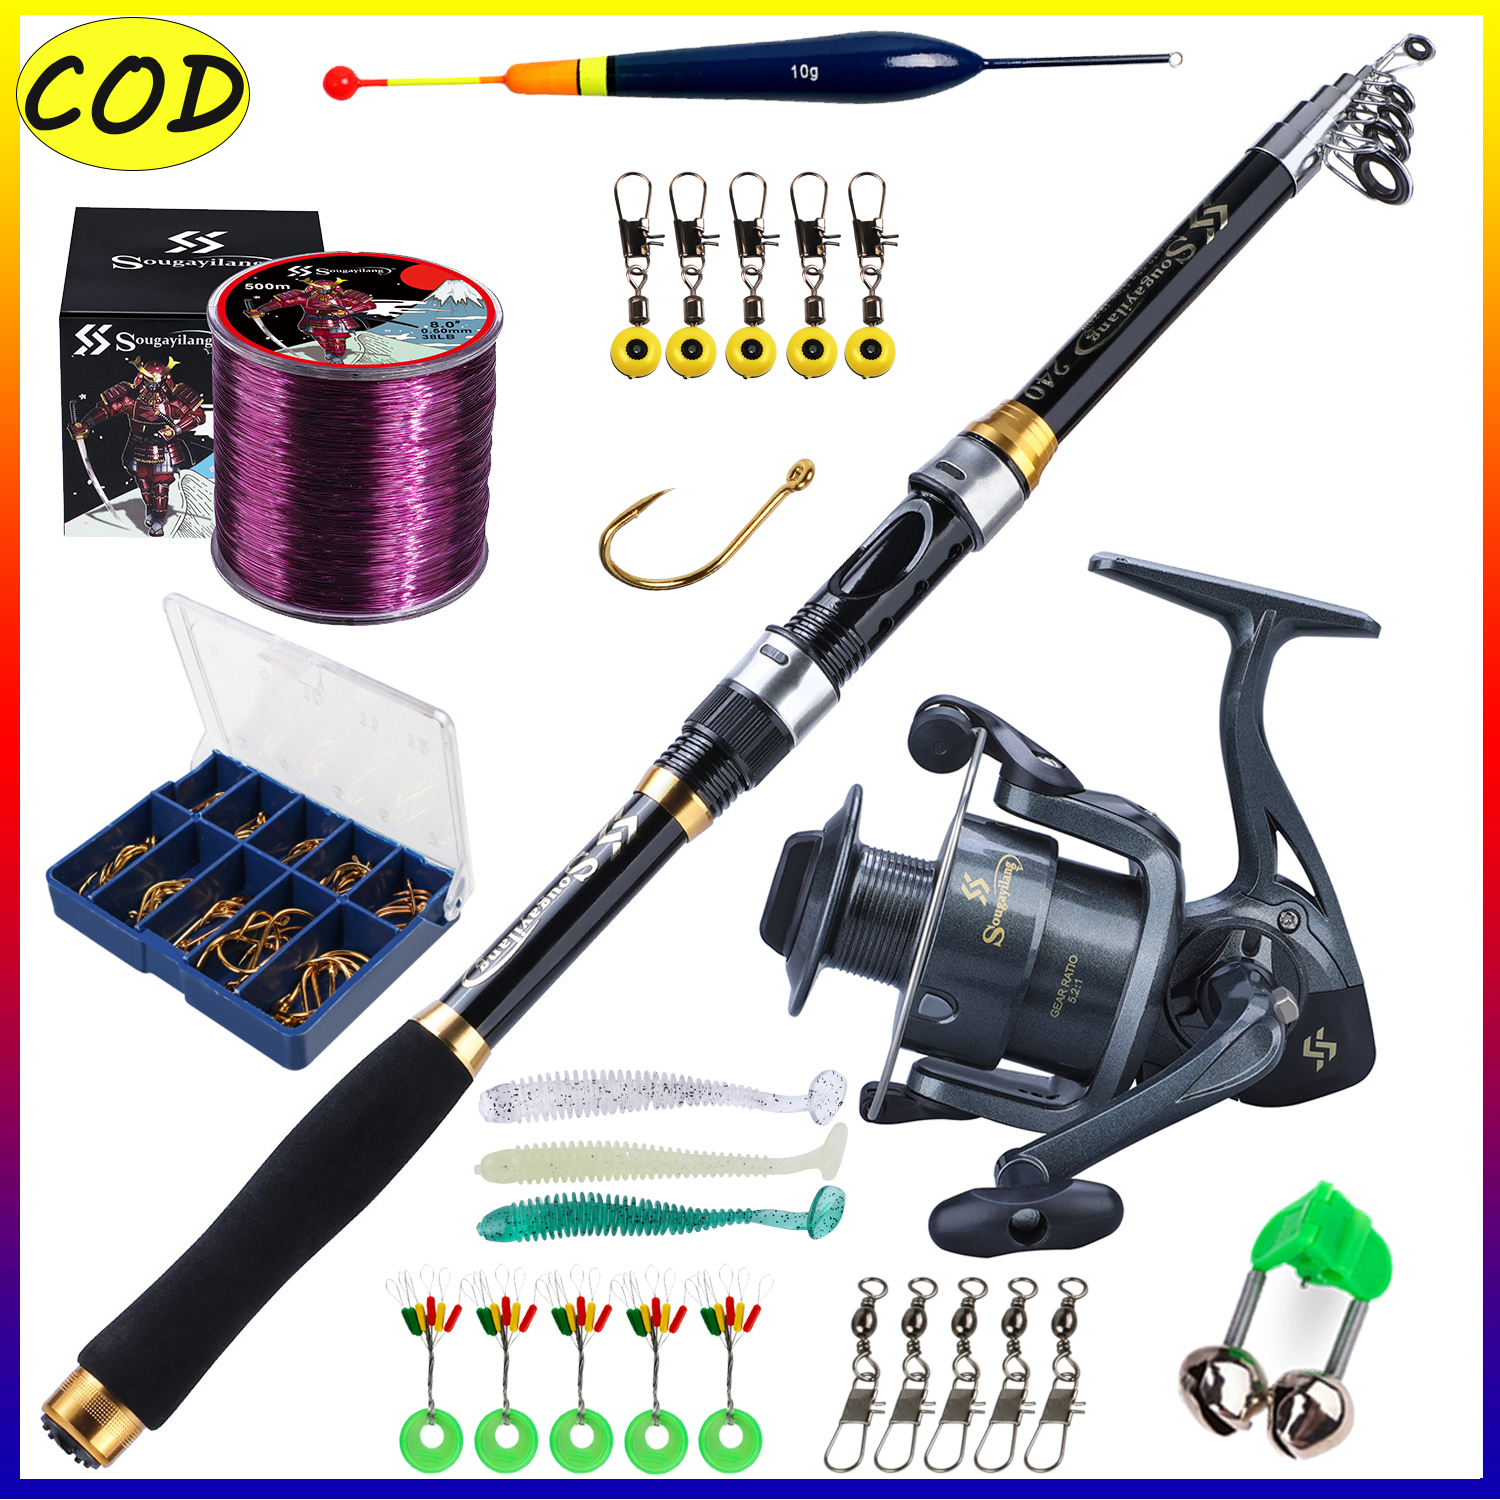 Buy Daiwa Glass Fiber Fishing Rod online